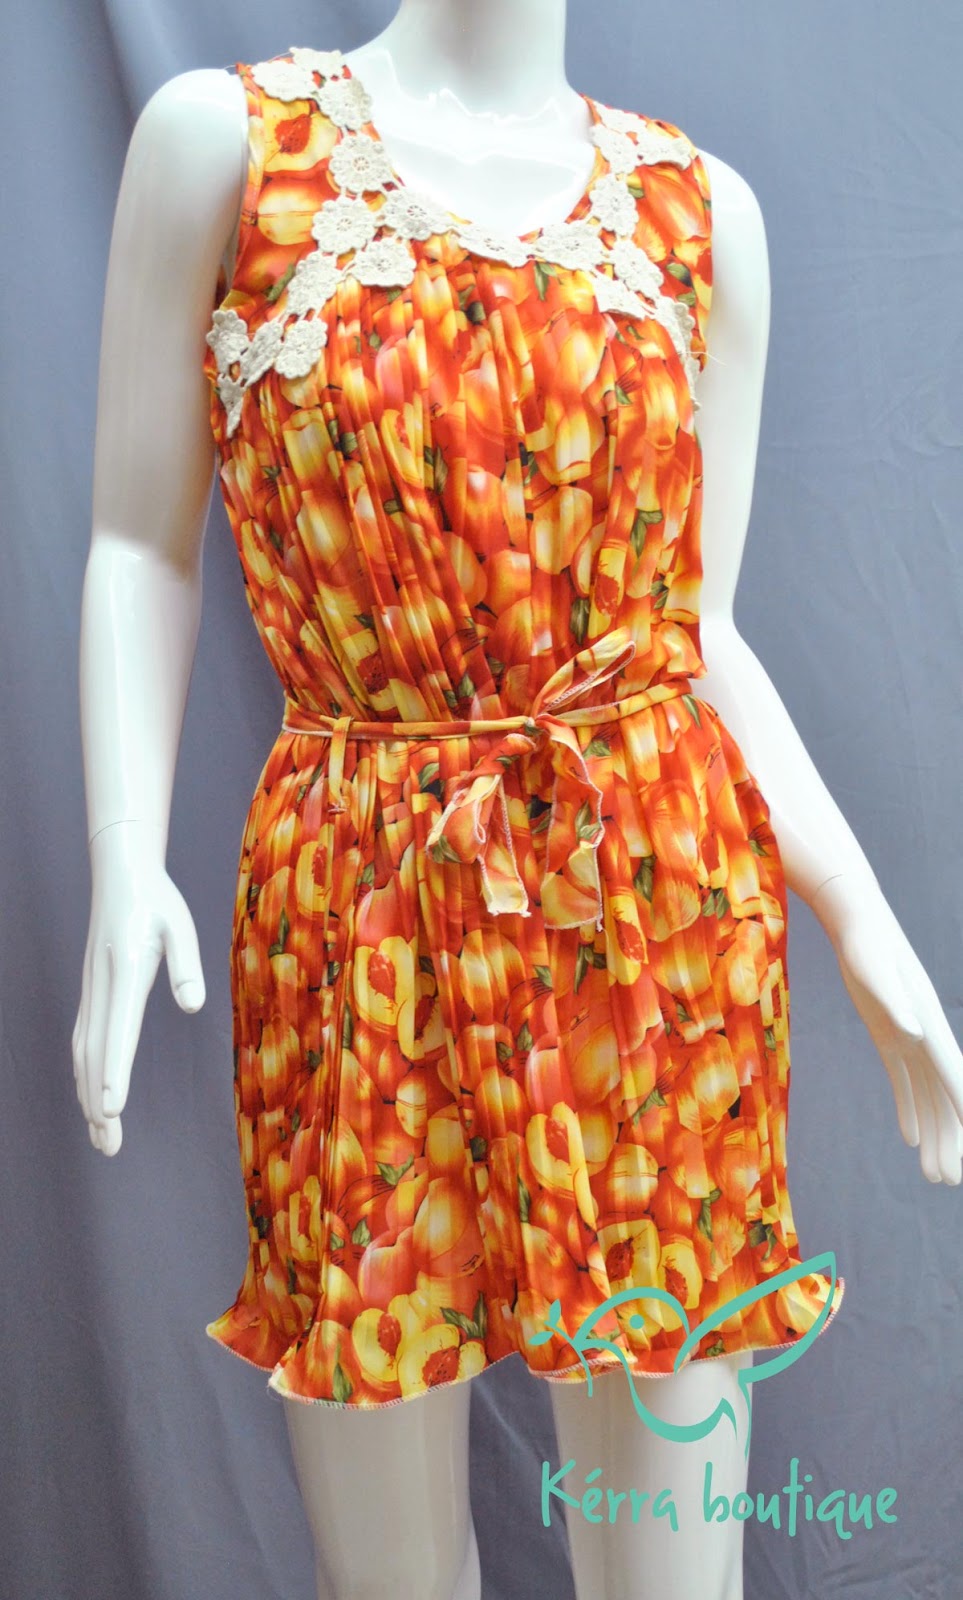 Kërra Boutique: D&G Inspired Fruit Print Dress RM55